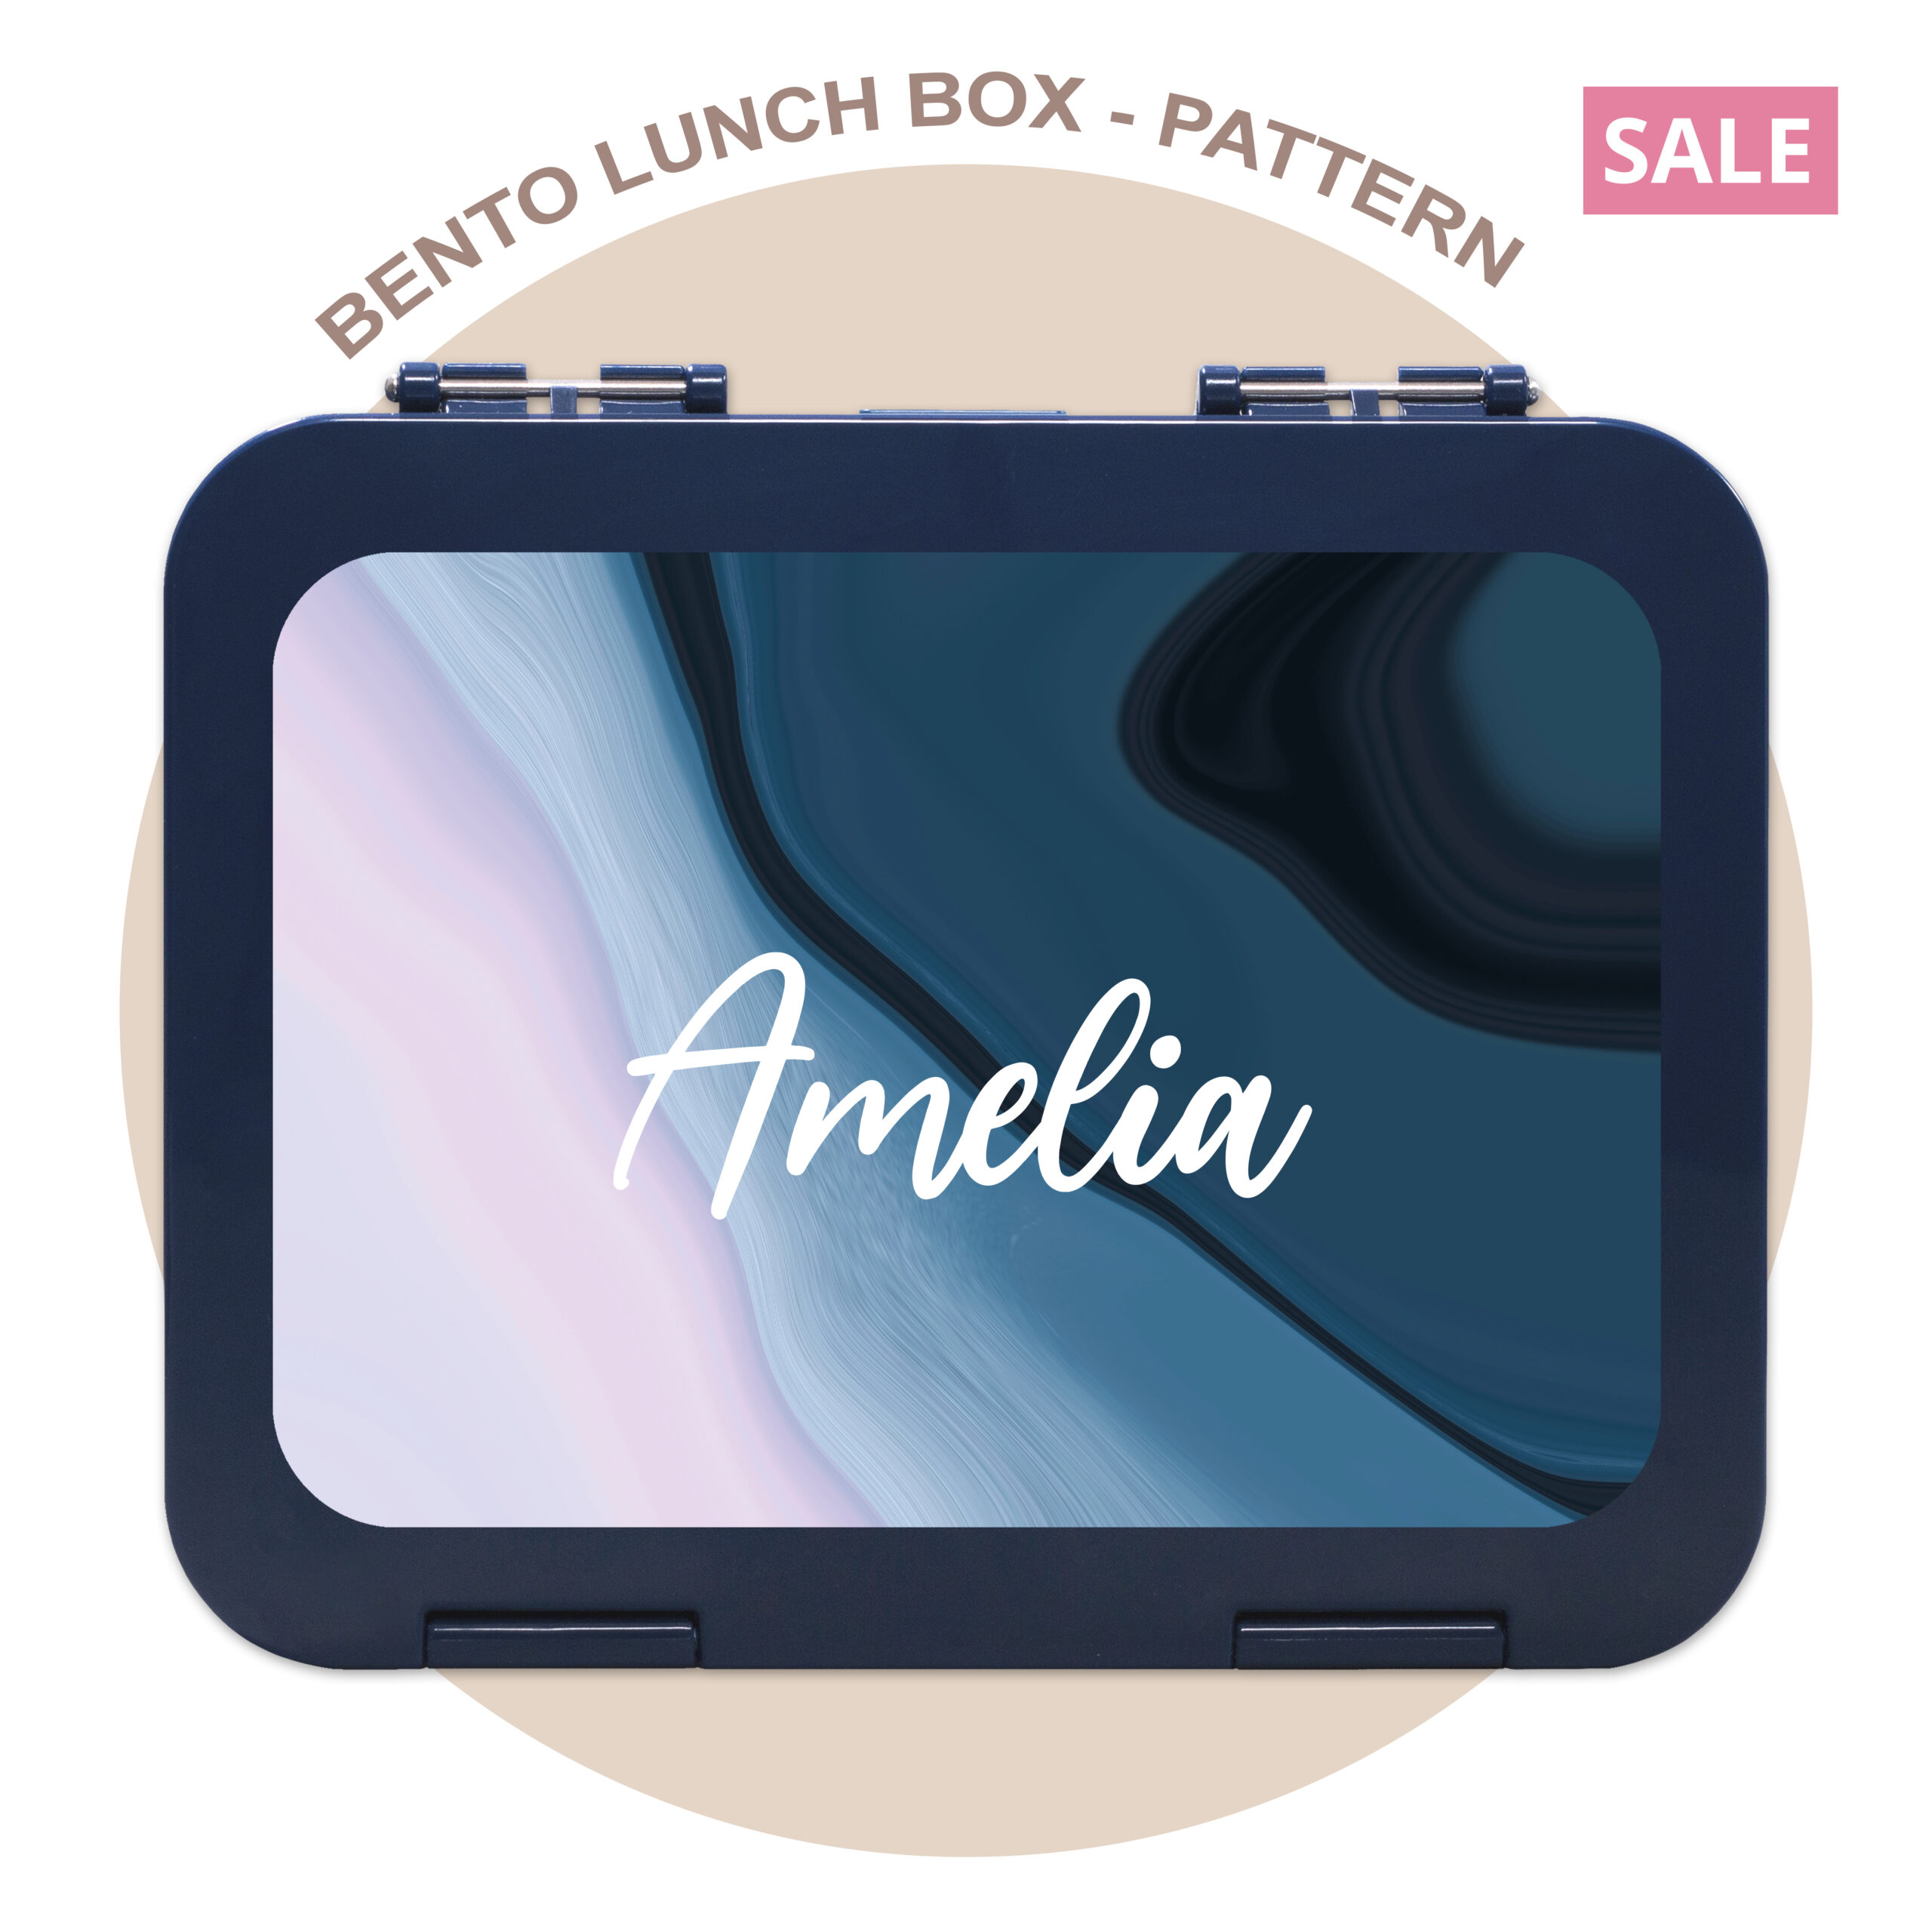 Bento Lunch Box Pattern